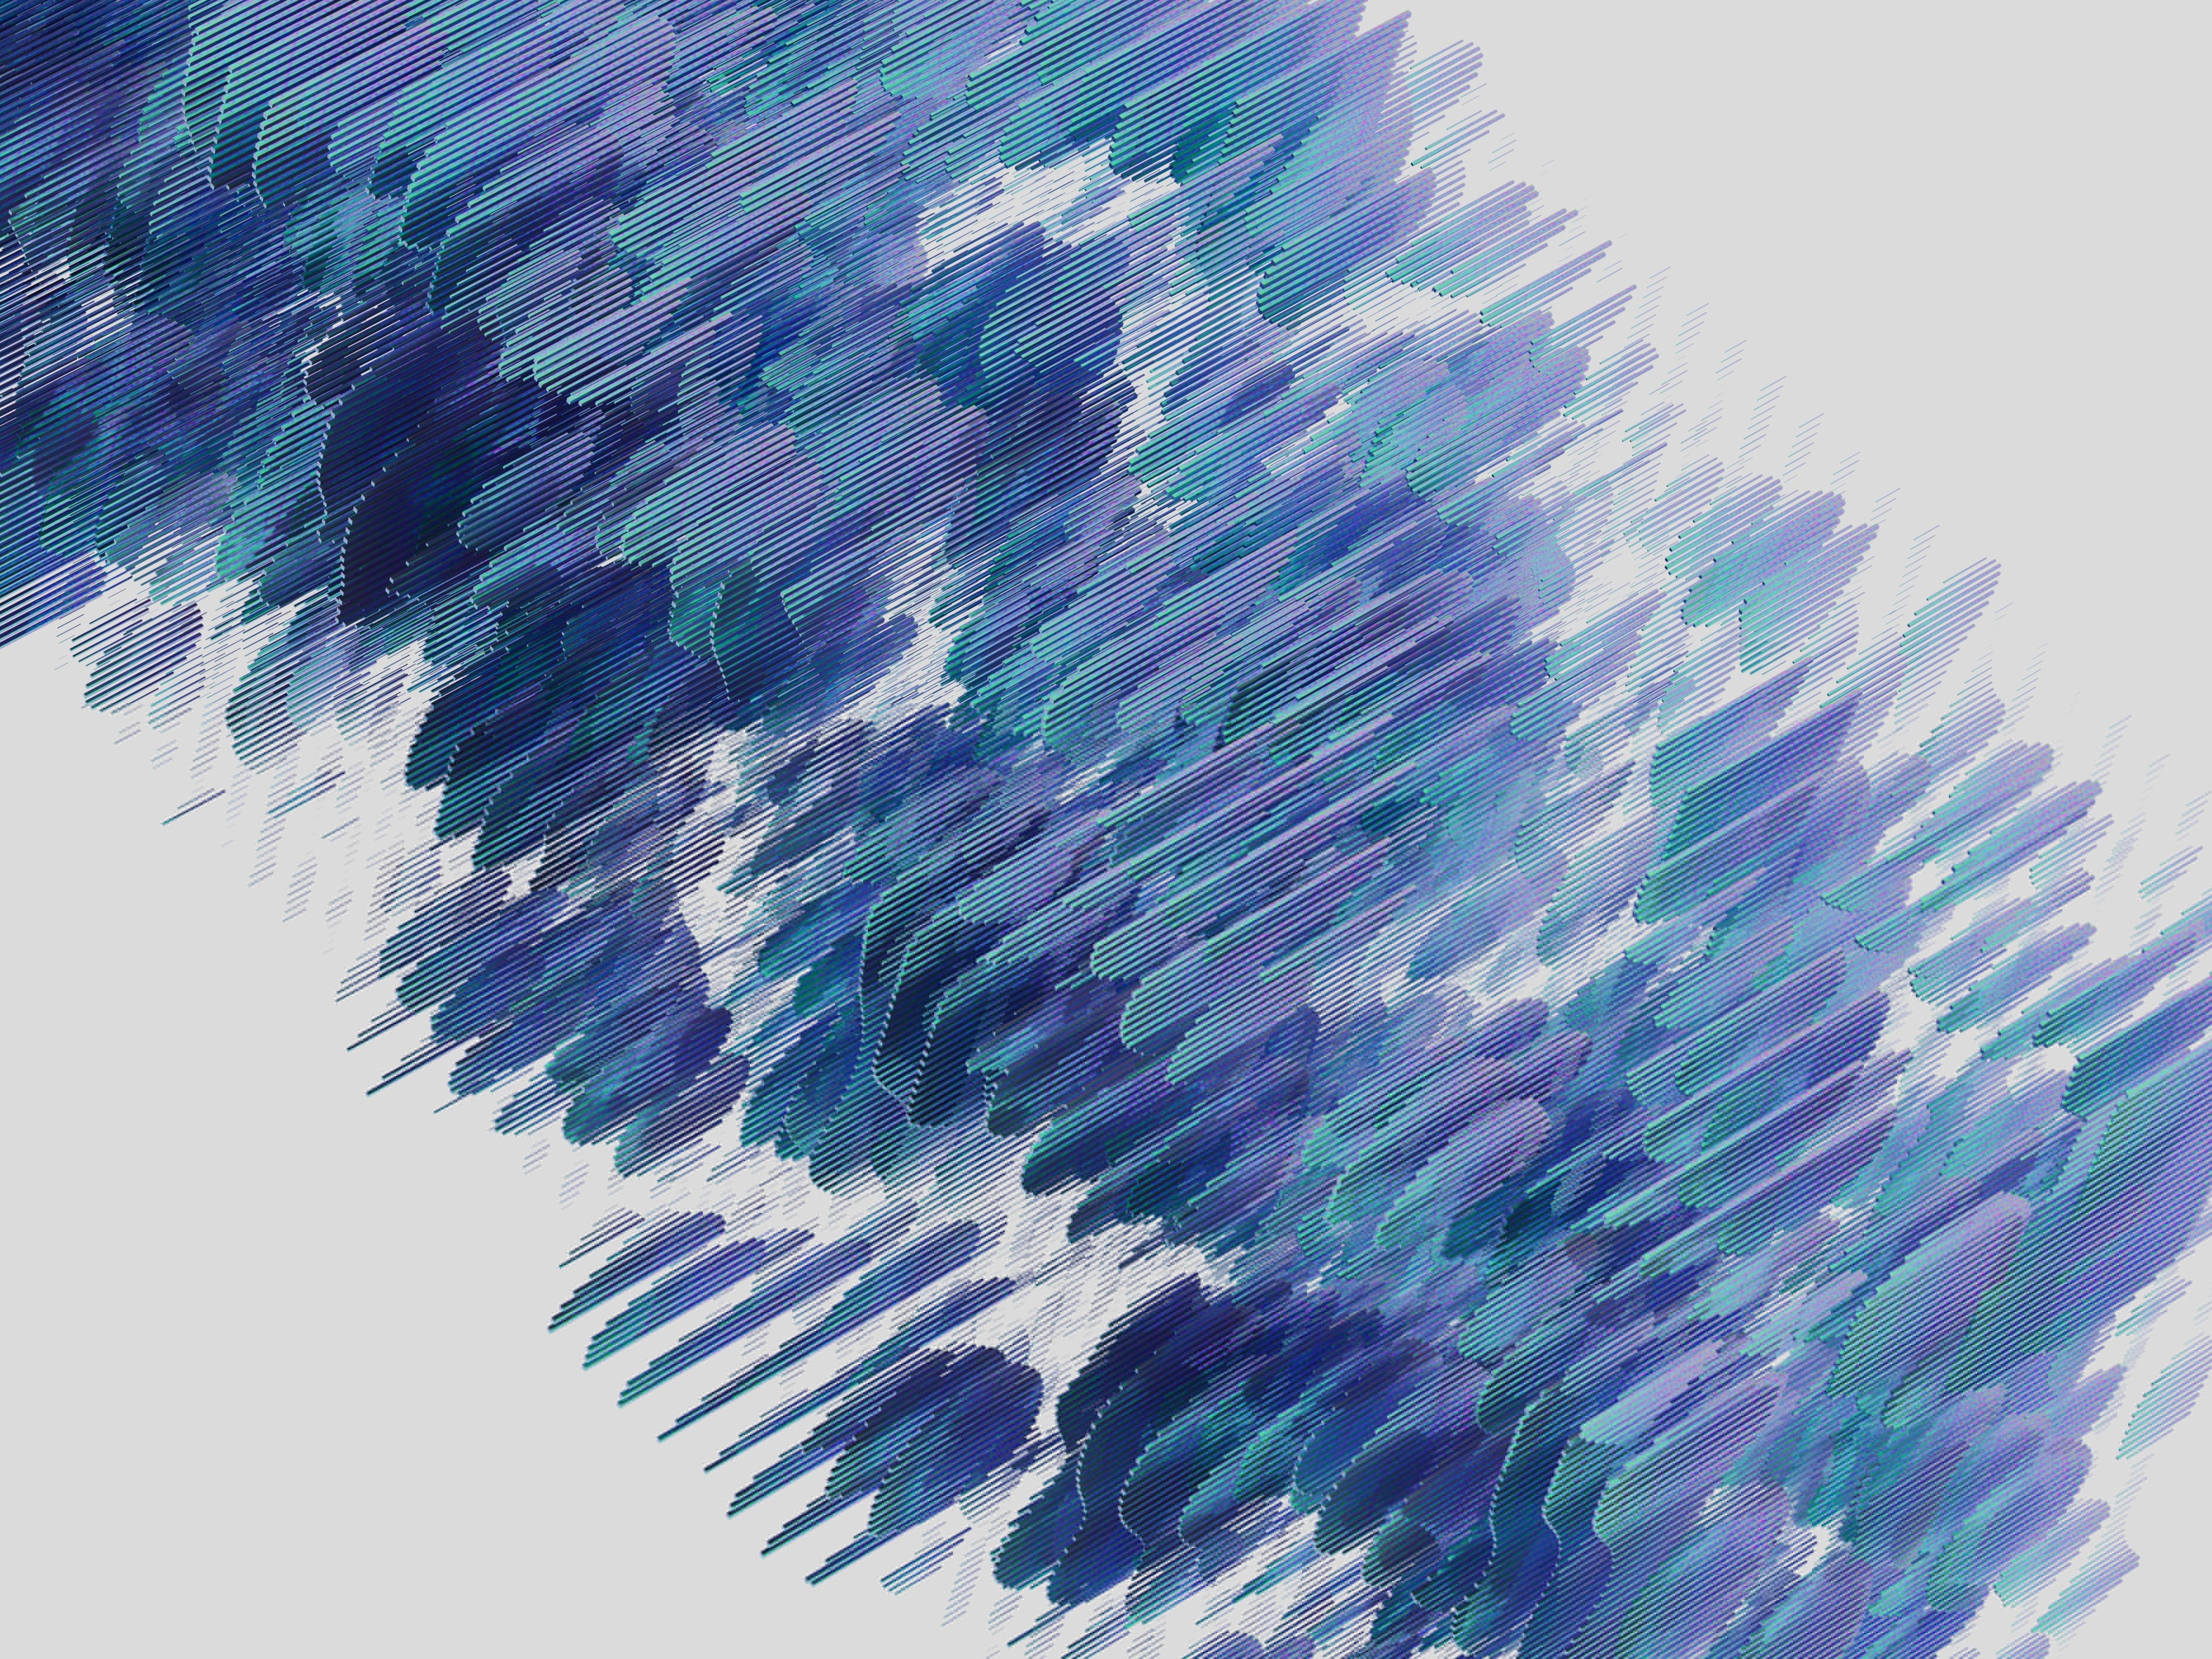 Blue to purple gradient splotch art